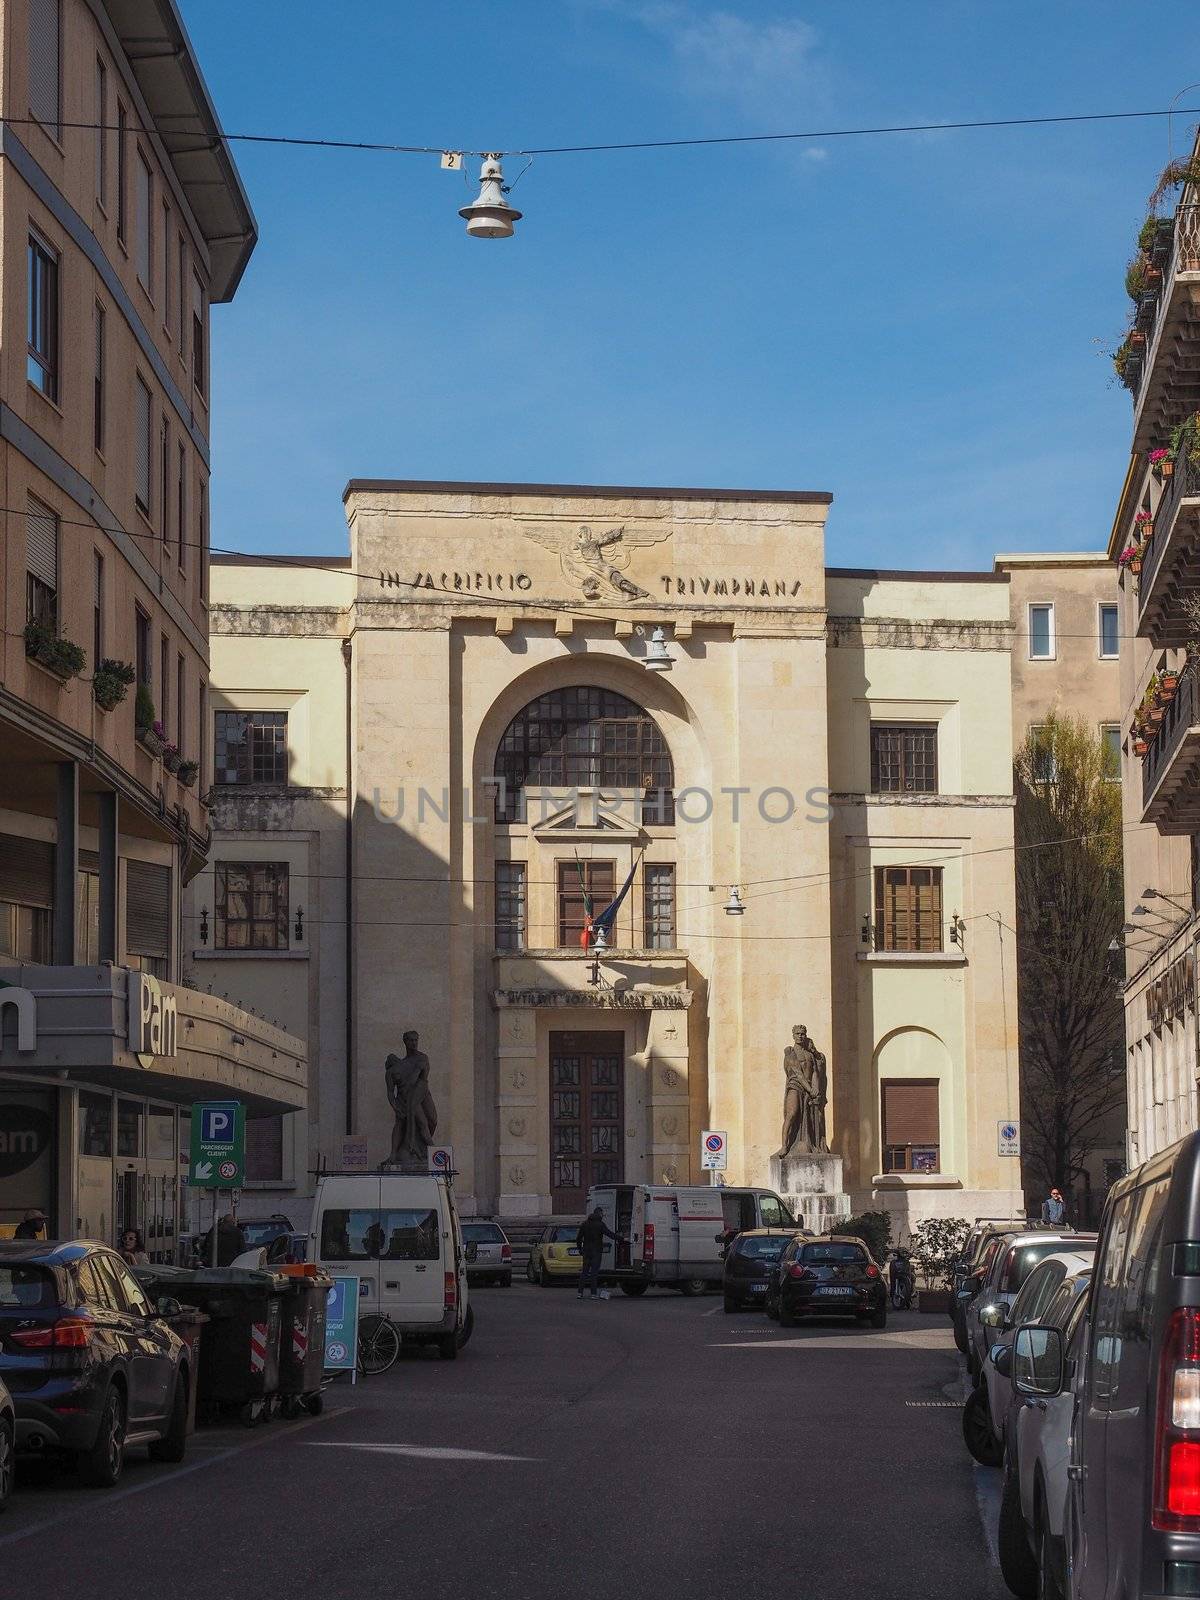 VERONA, ITALY - CIRCA MARCH 2019: Palazzo dei Mutilati (House of the Mutilated). In sacrificio triumphans means Triumphant in sacrifice